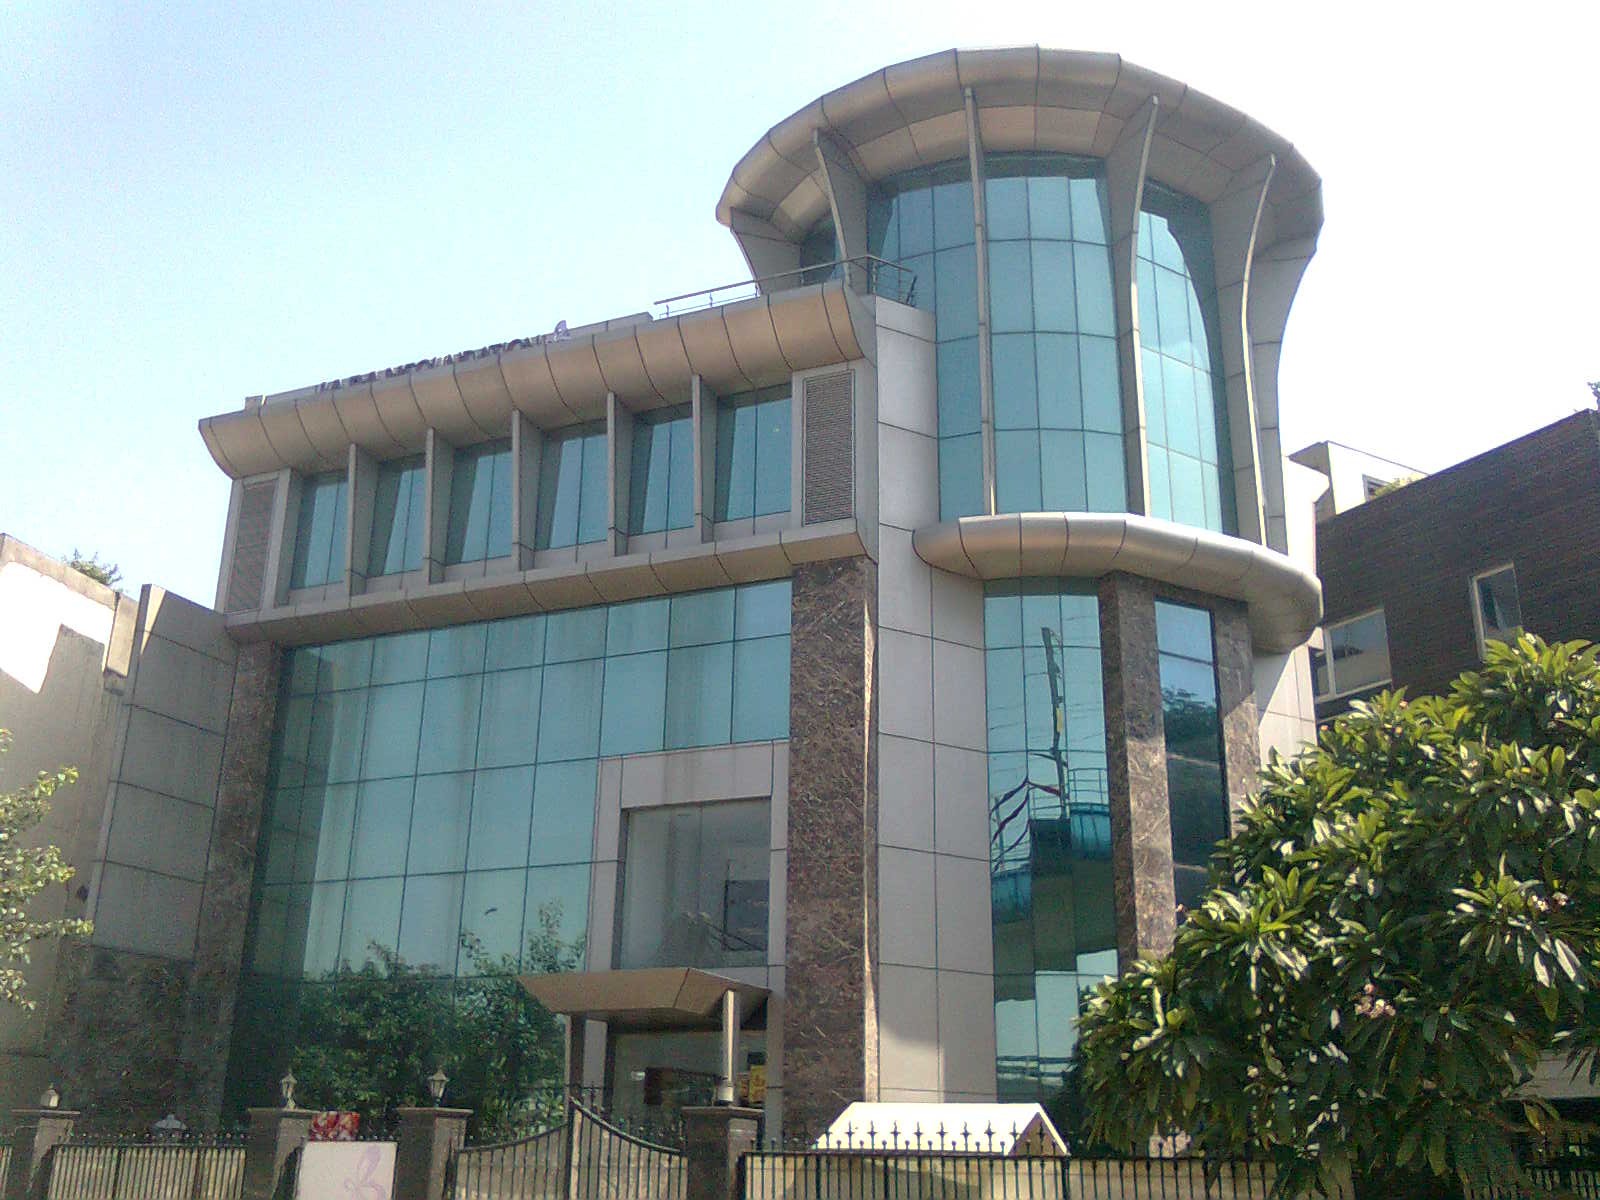 The Japan Foundation Library, New Delhi